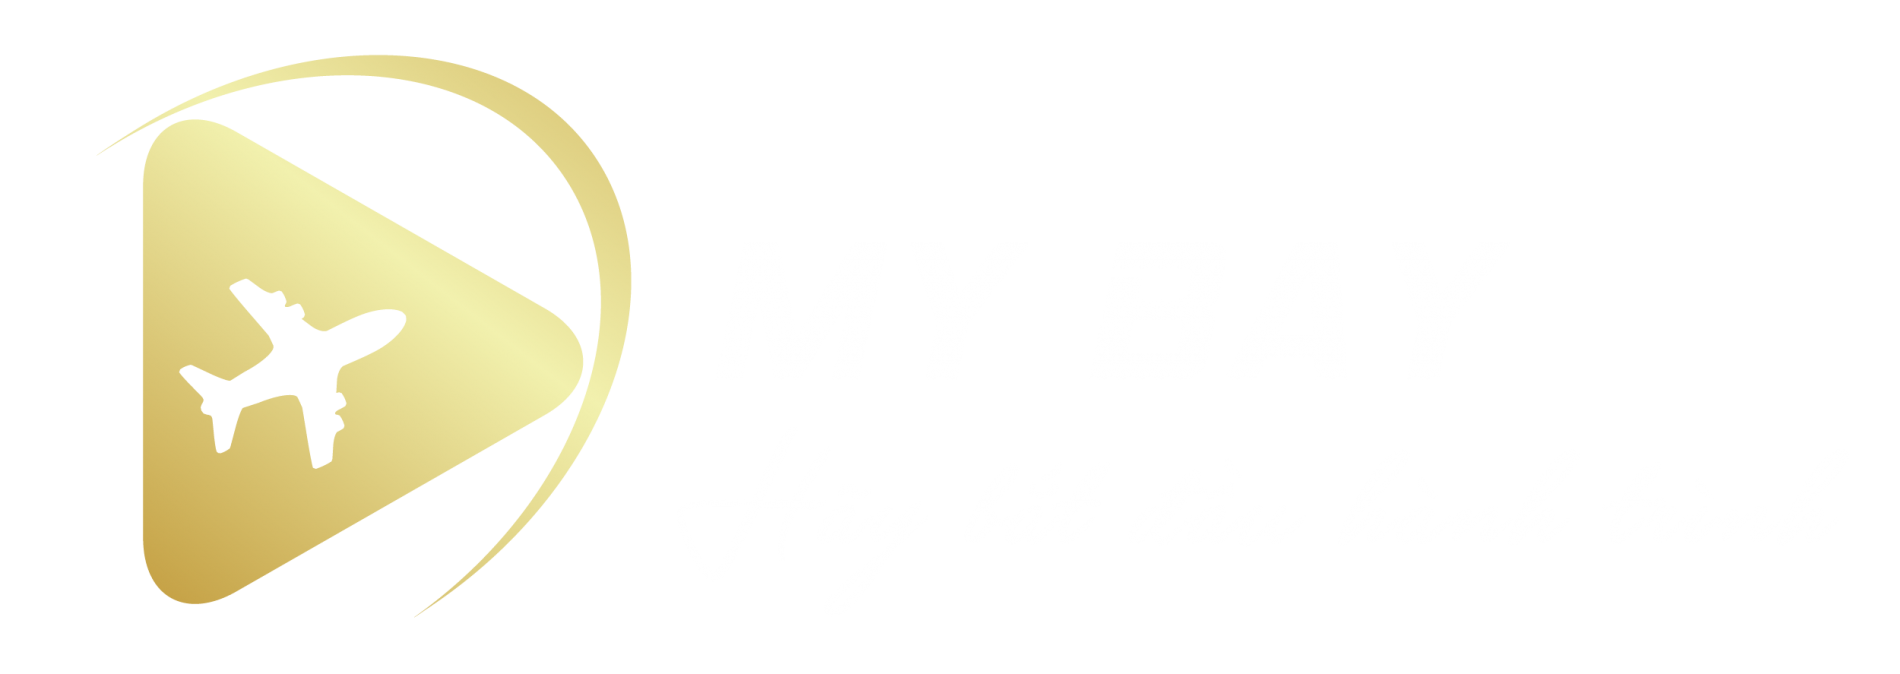 logo_myba3y-05